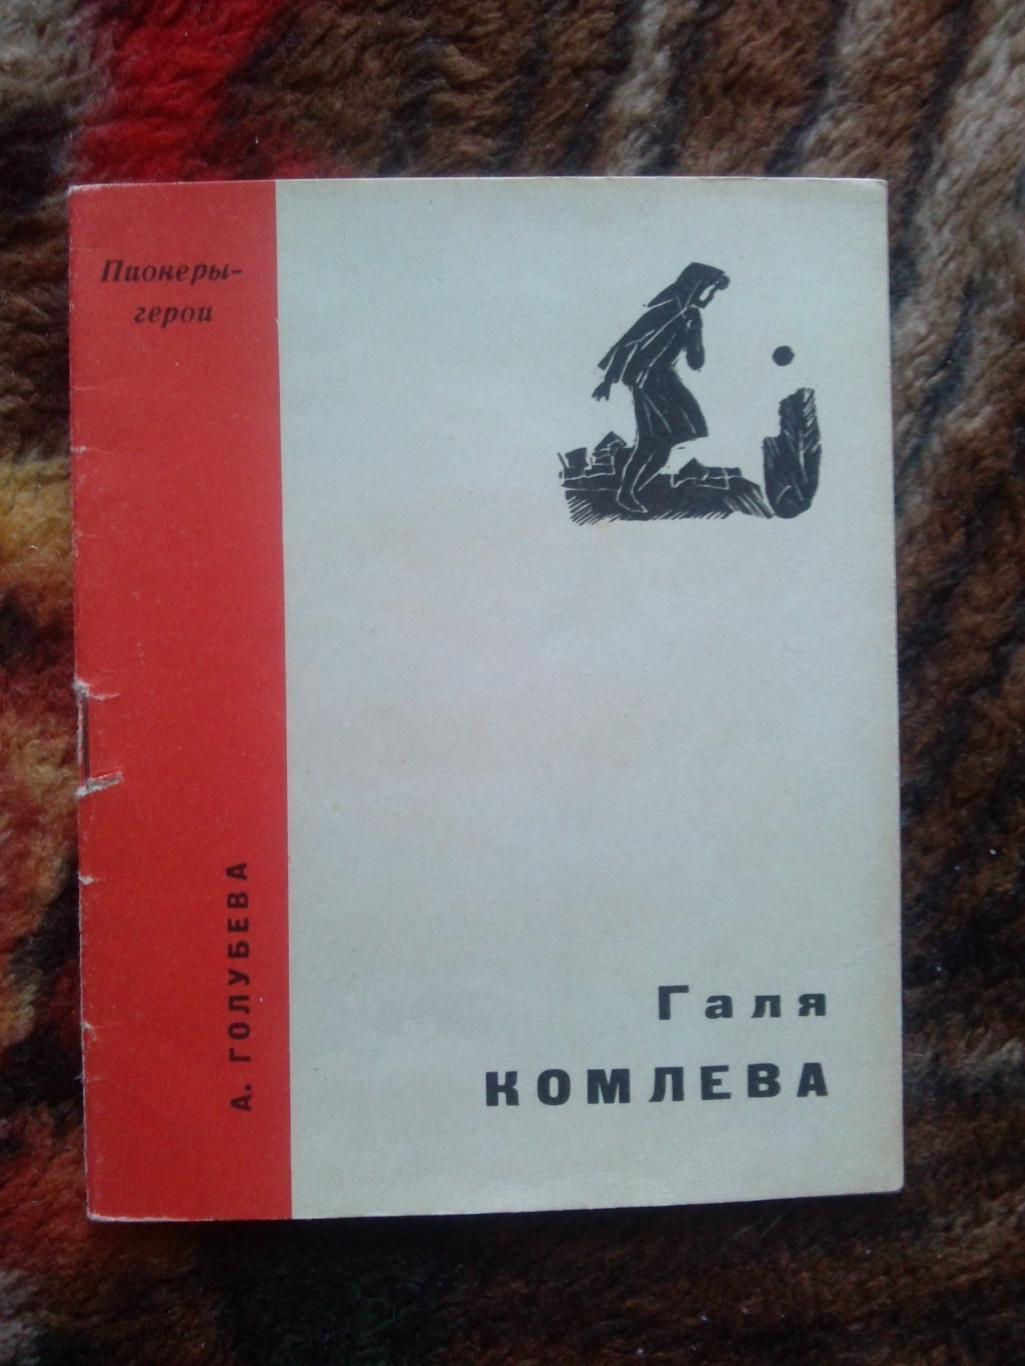 Пионеры-герои (Плакат + брошюра) 1967 г. Галя Комлева (Пионер , агитация) 3